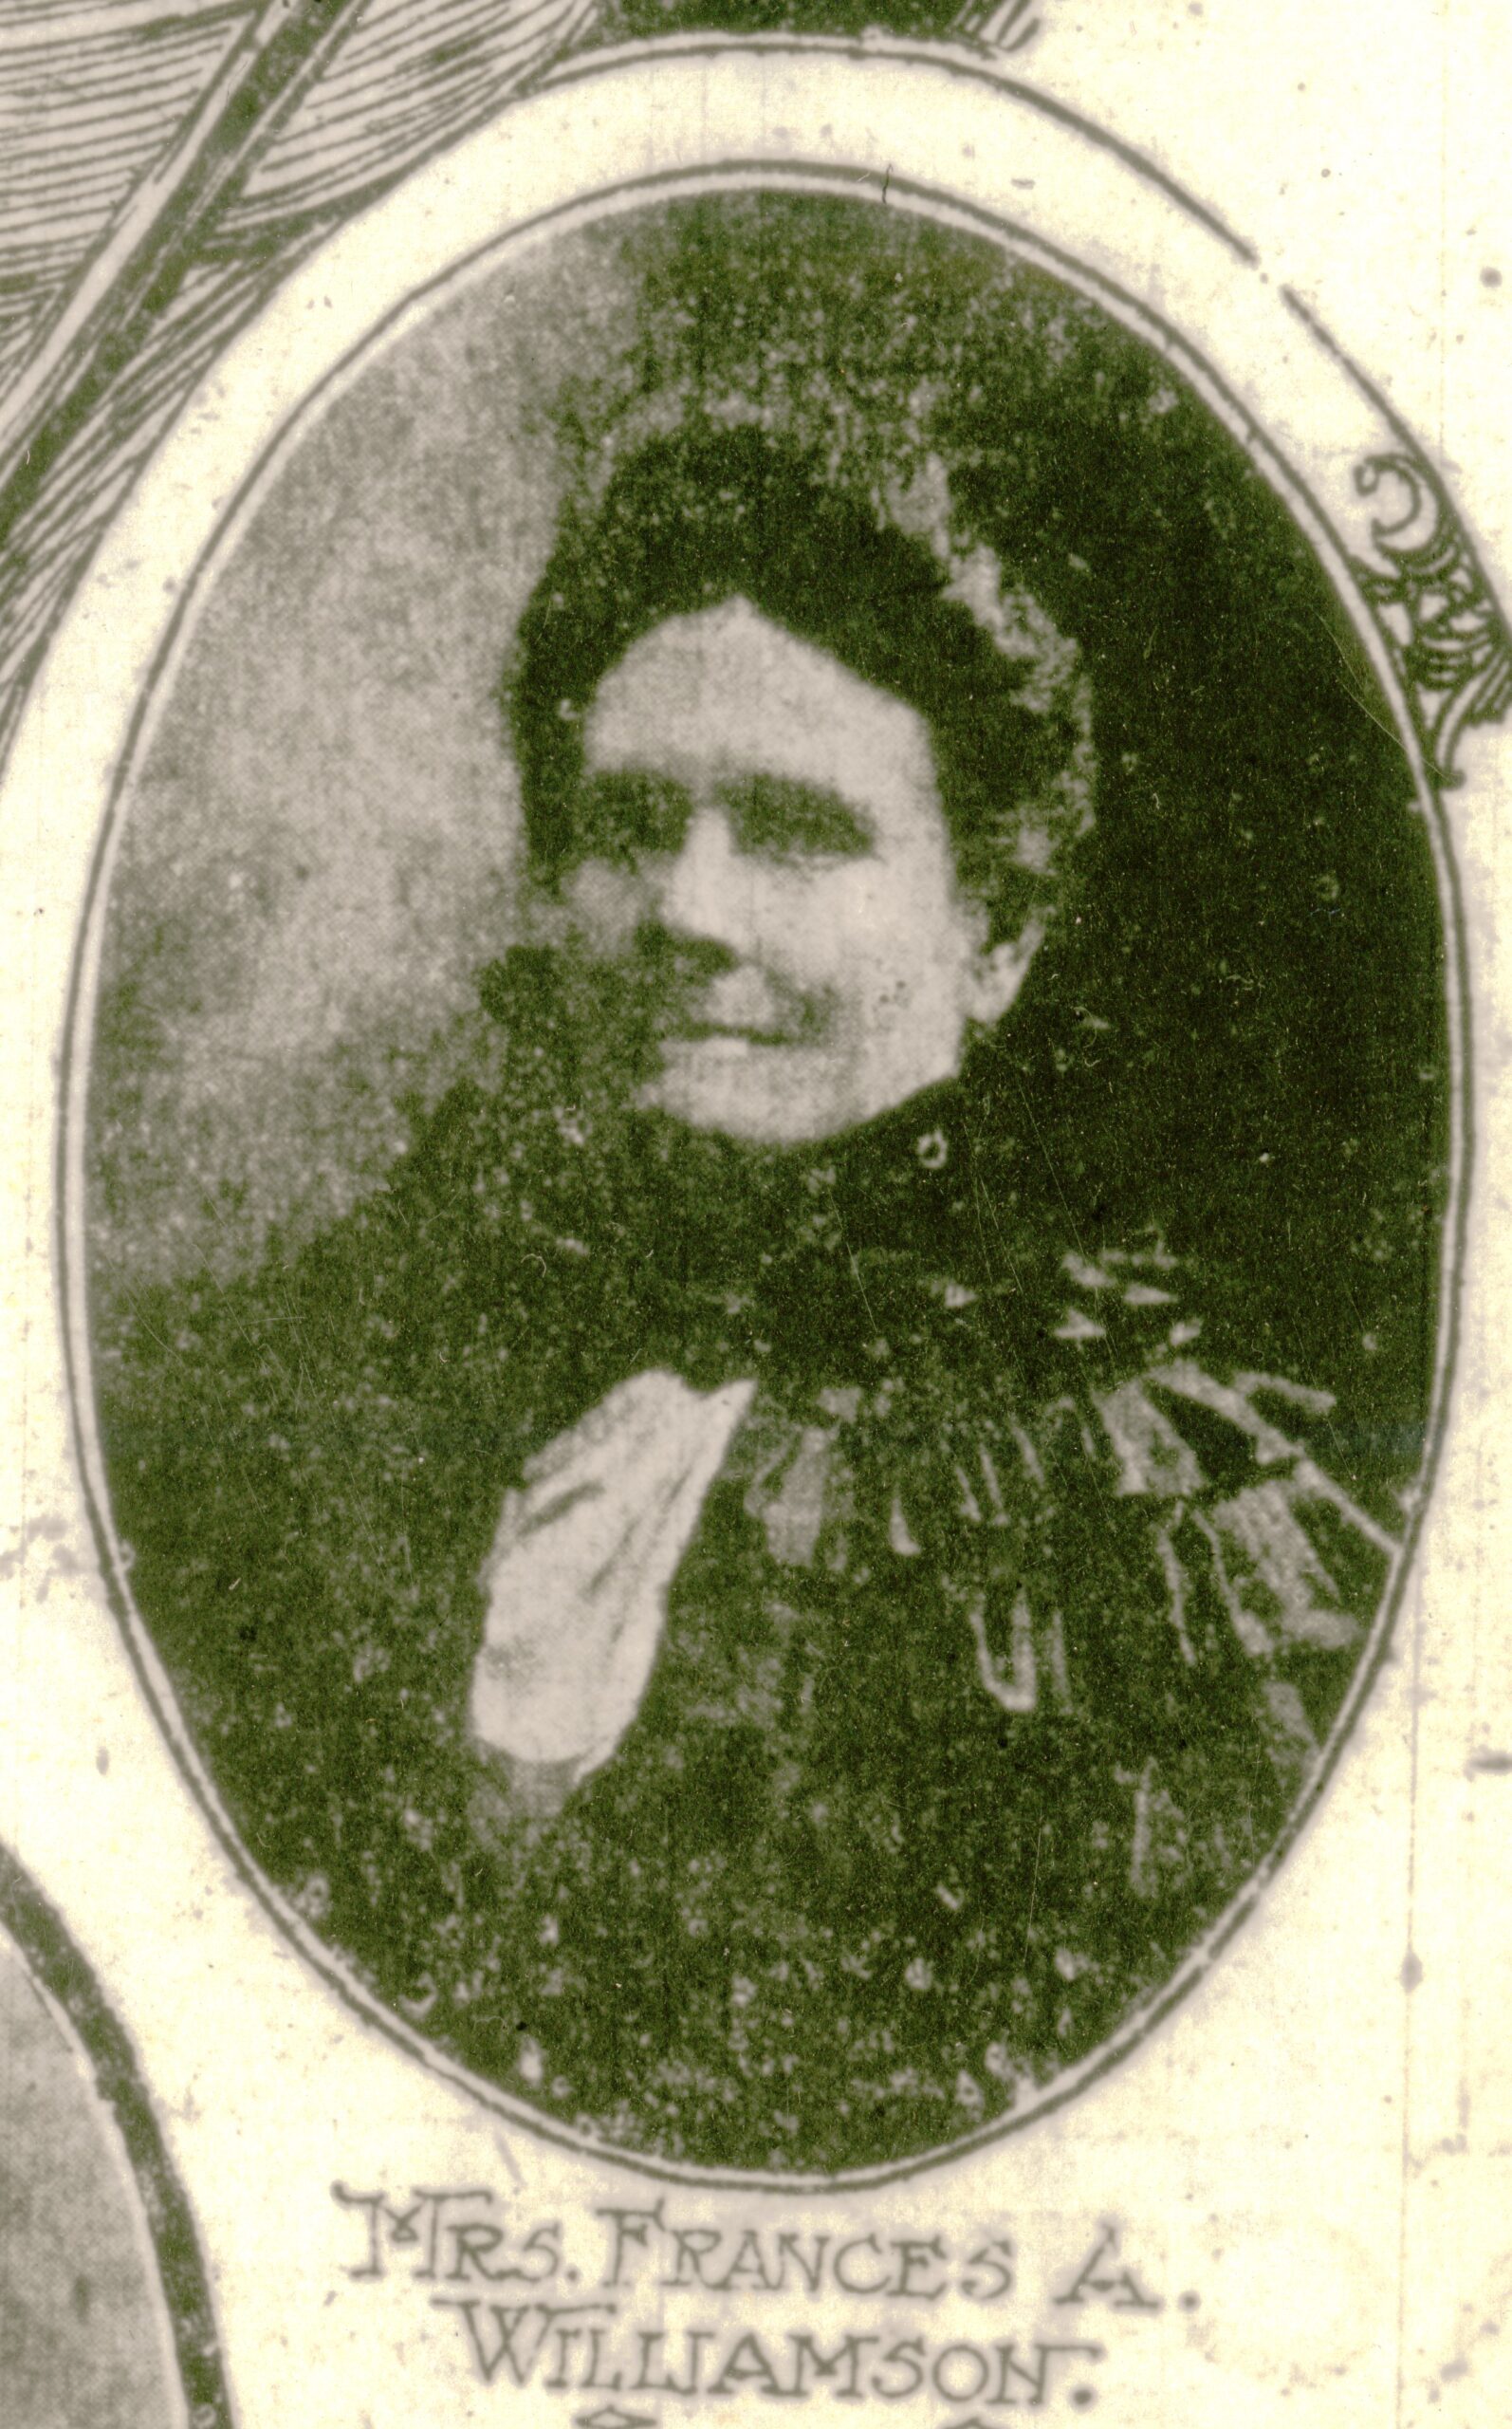 Mrs. Frances A. Williamson